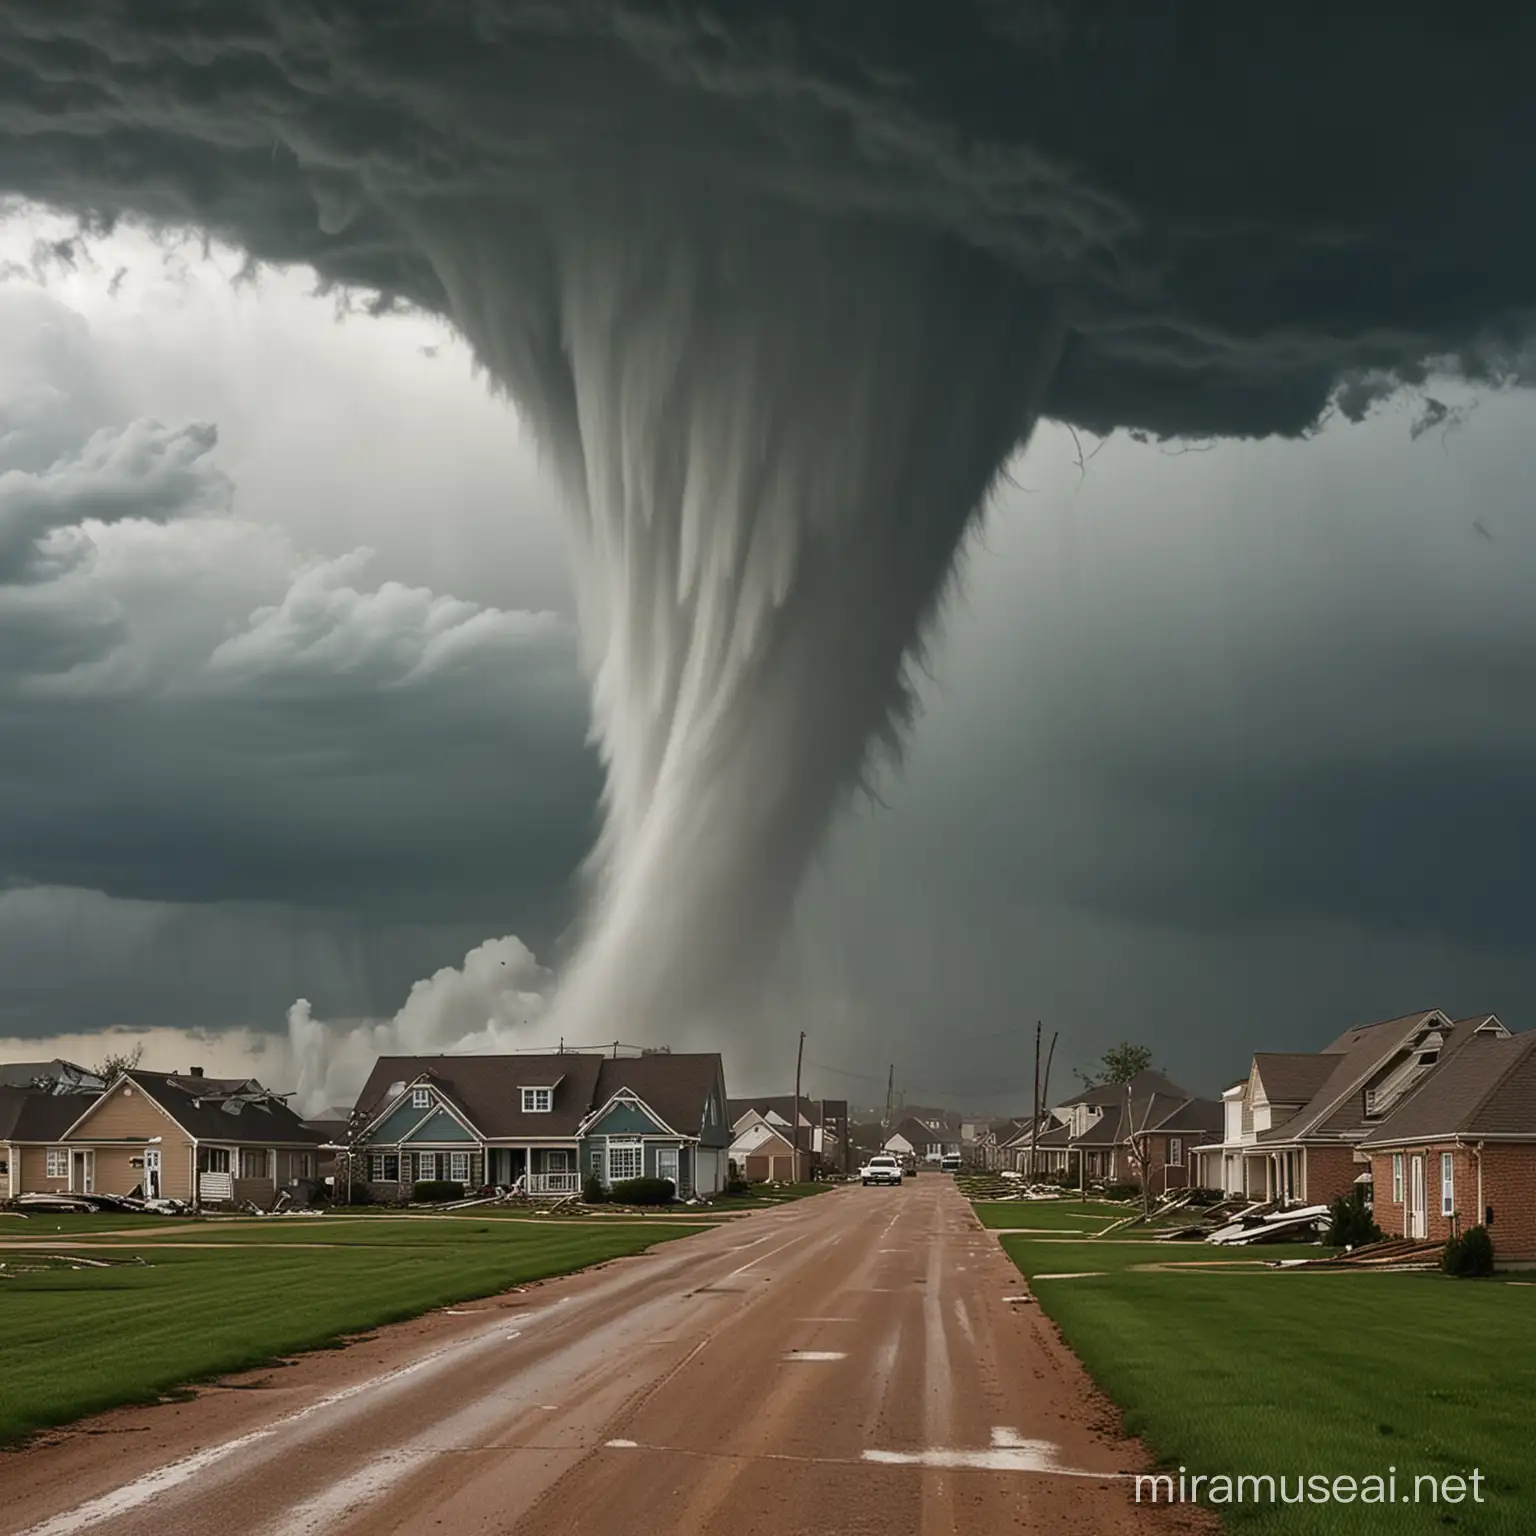 Massive Tornado Ravaging Urban Landscape Destruction and Chaos